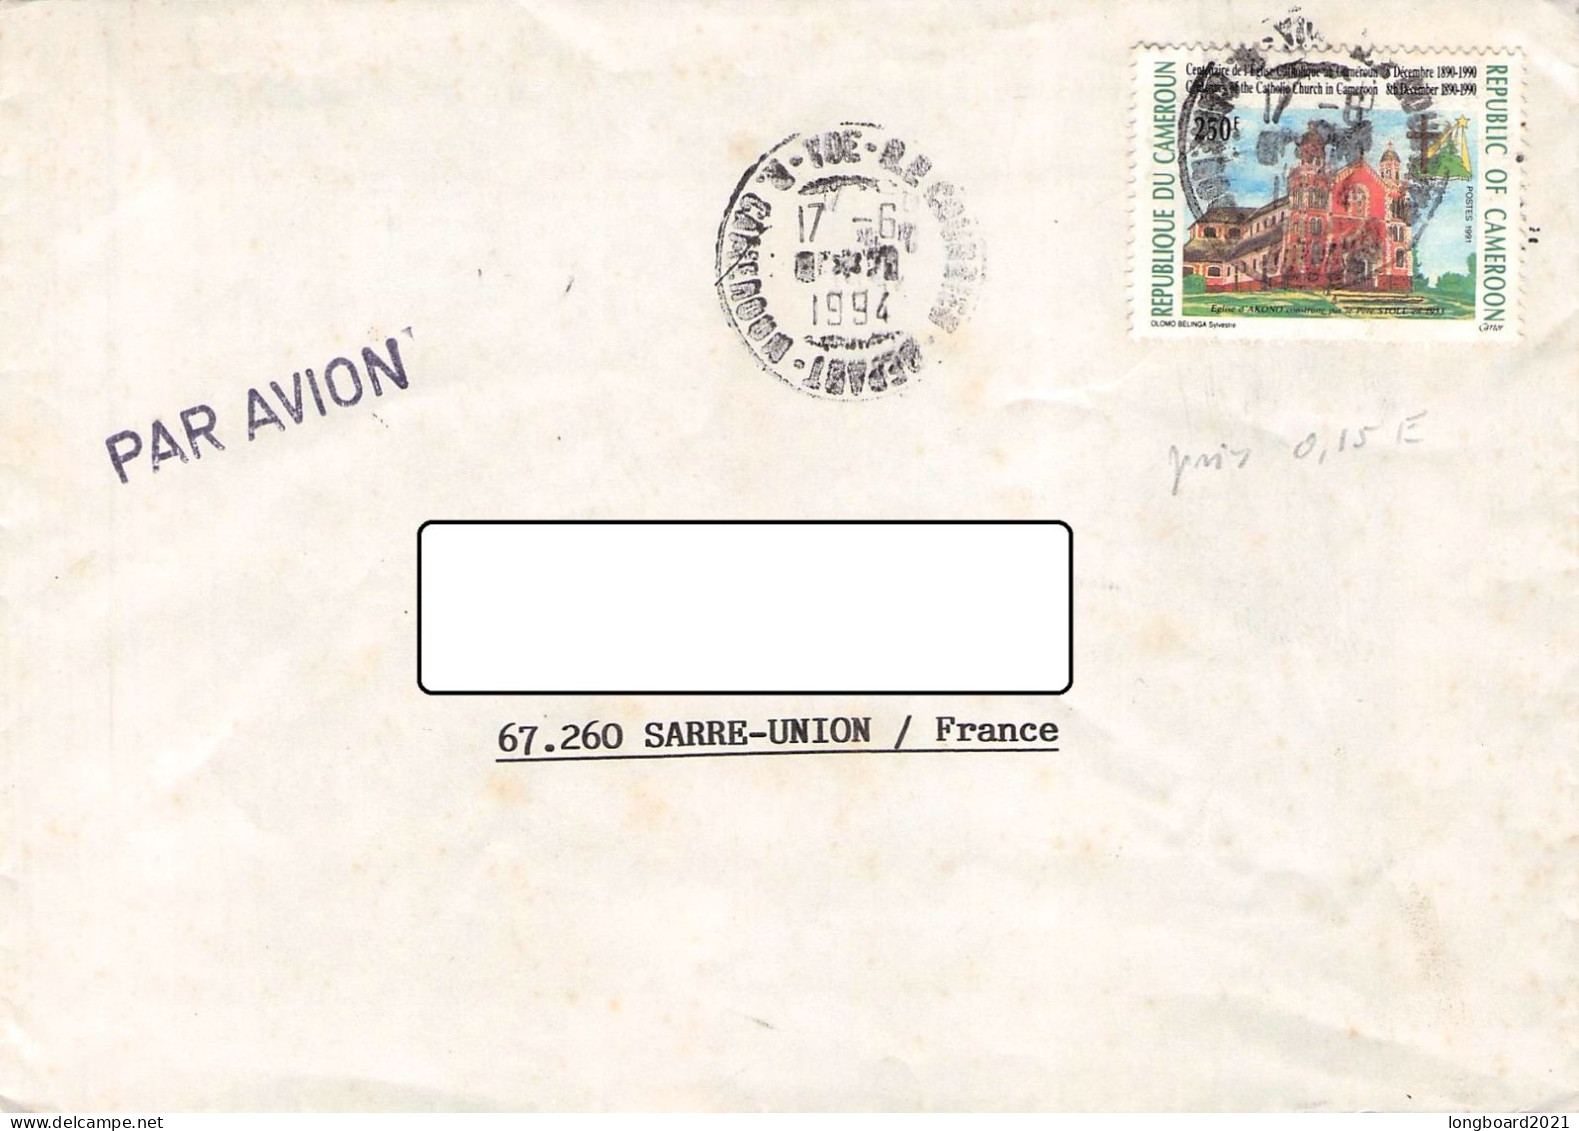 CAMEROON - AIRMAIL 1994 - SARRE UNION/FR /4518 - Kameroen (1960-...)